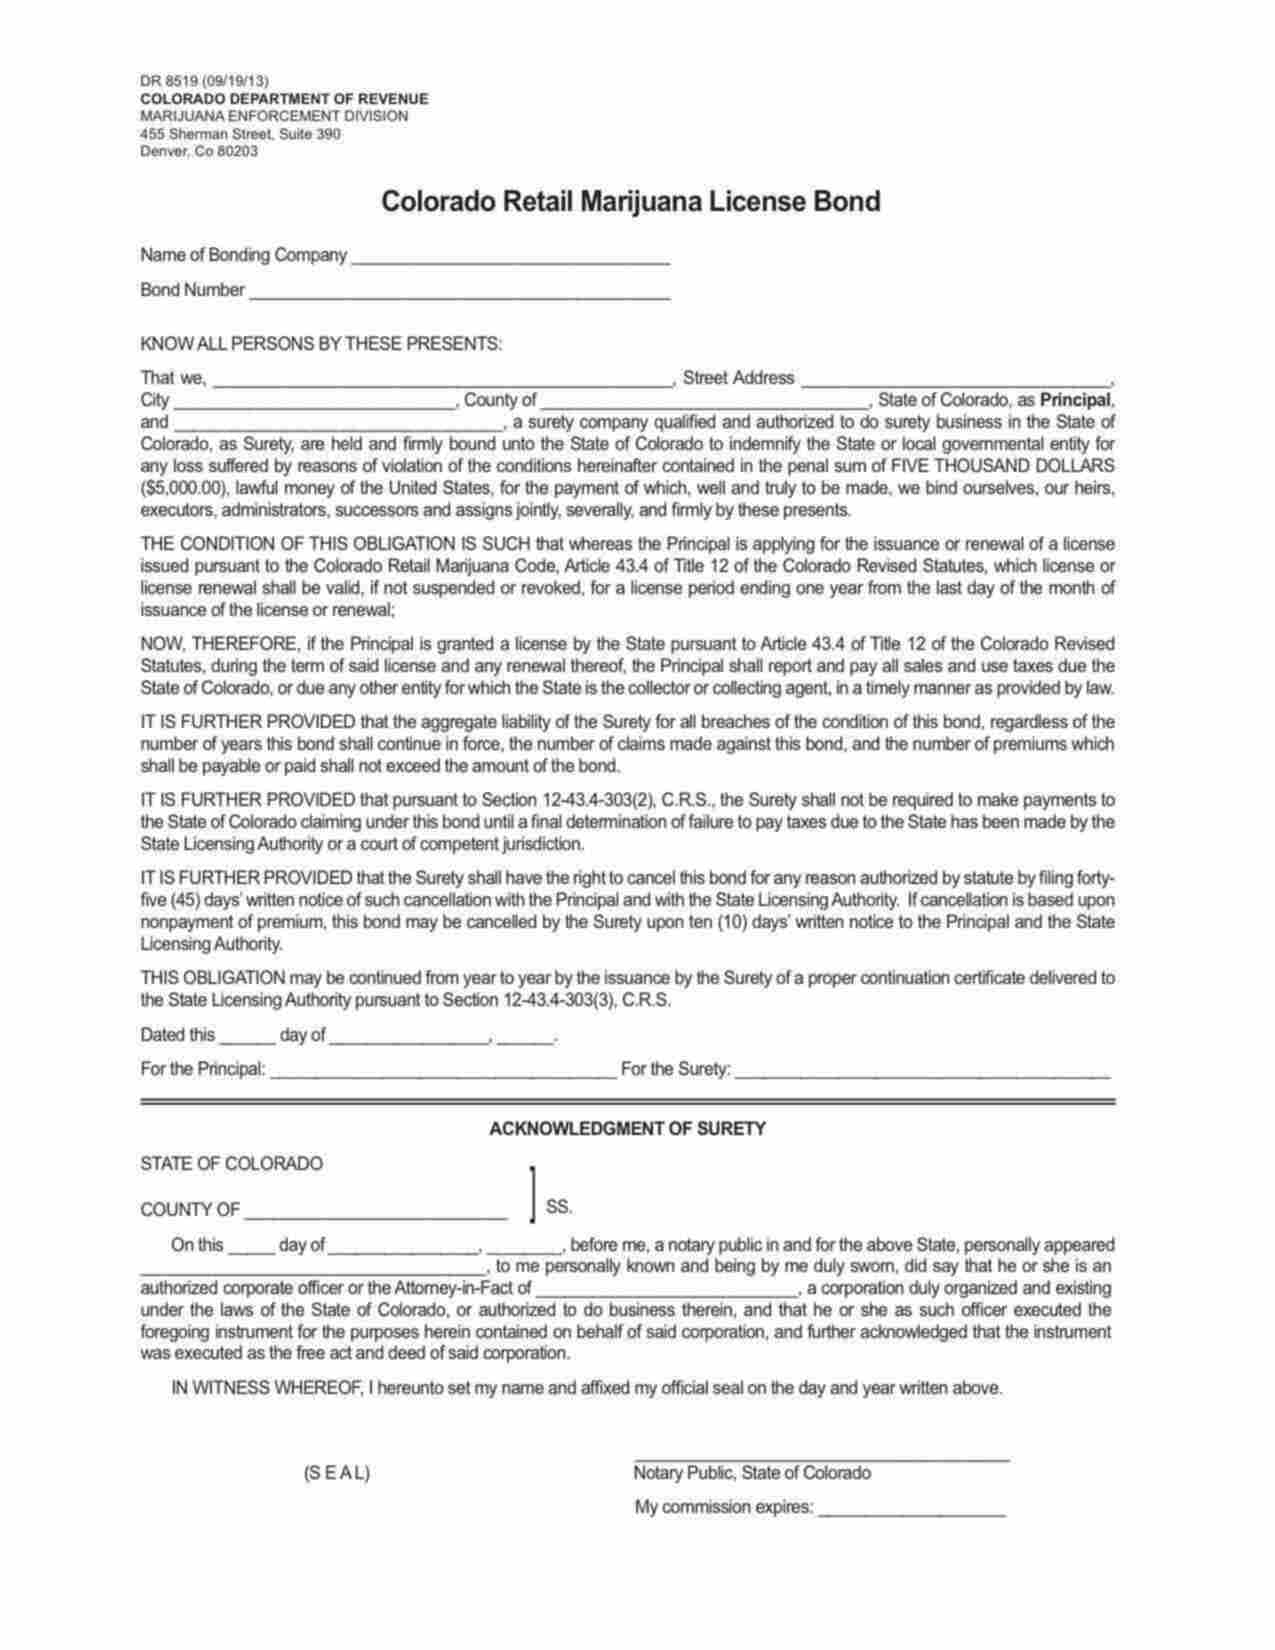 Colorado Retail Marijuana License Bond Form